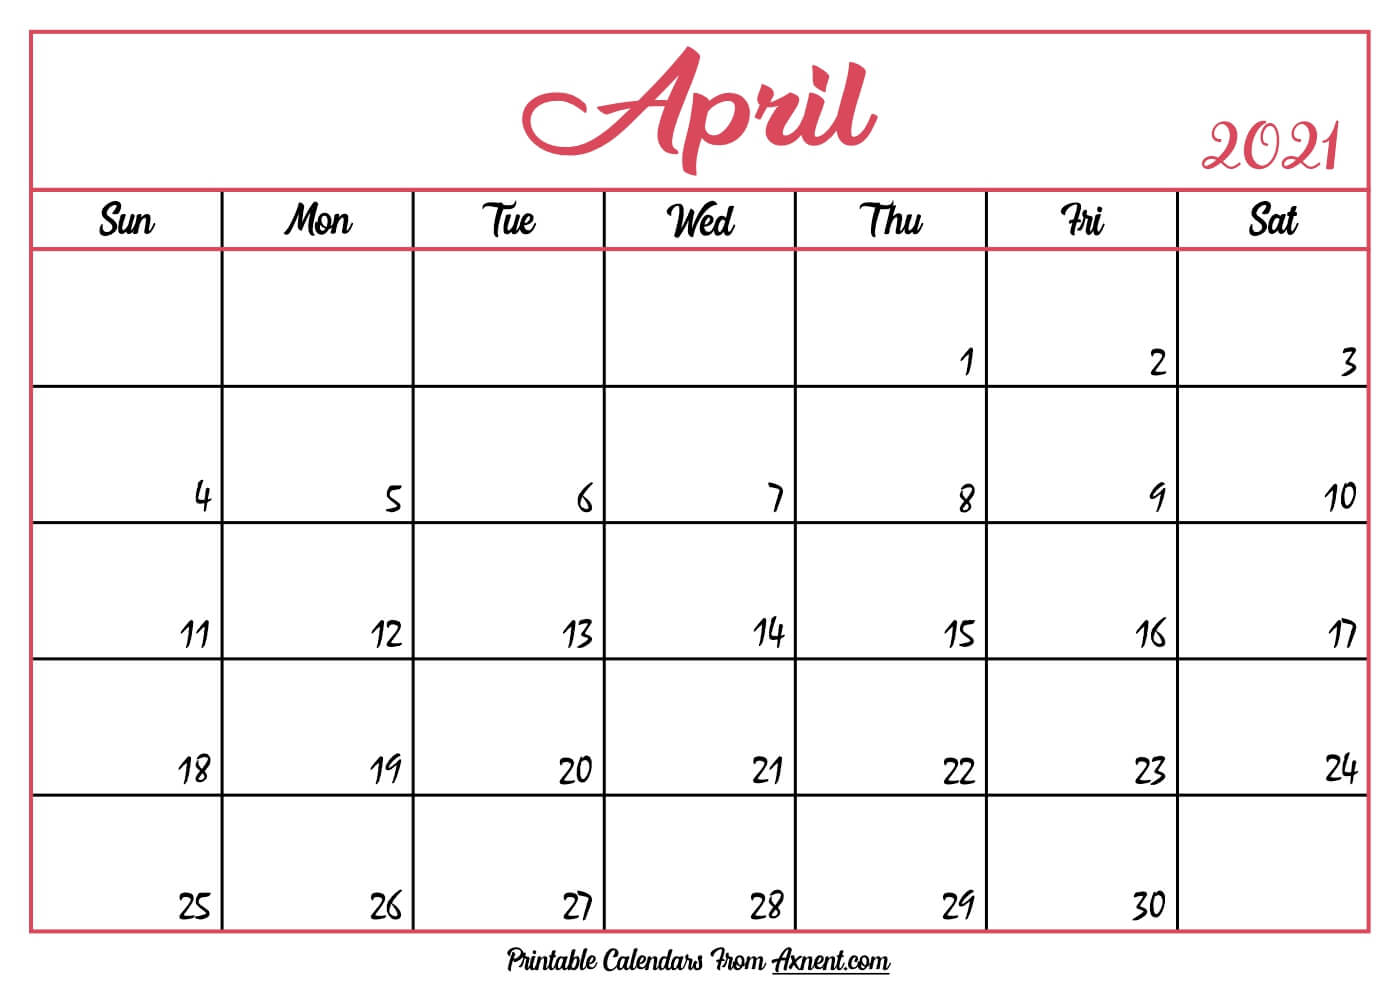 April Printable Calendar 2021